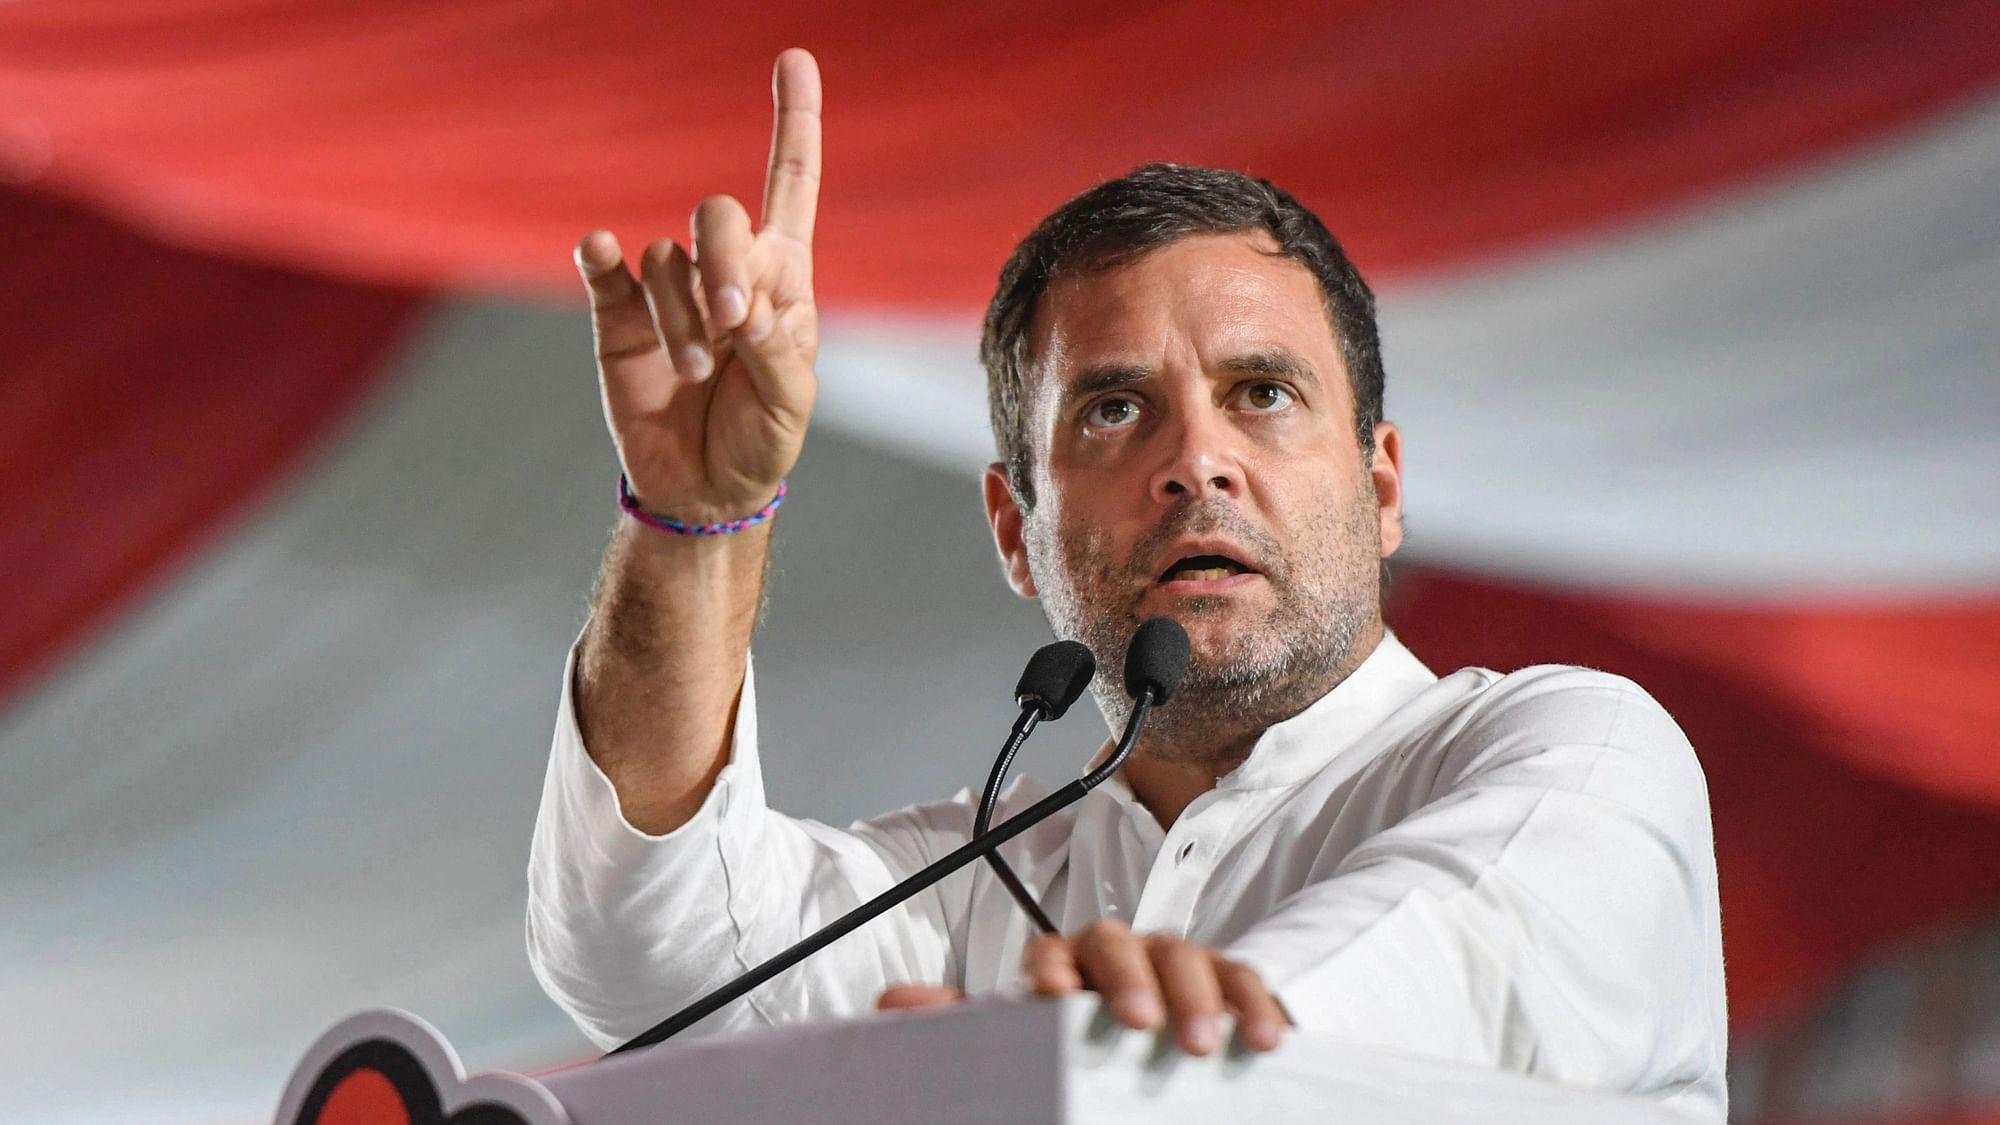 <div class="paragraphs"><p>File photo of Congress leader Rahul Gandhi, used for representative purposes.&nbsp;</p></div>